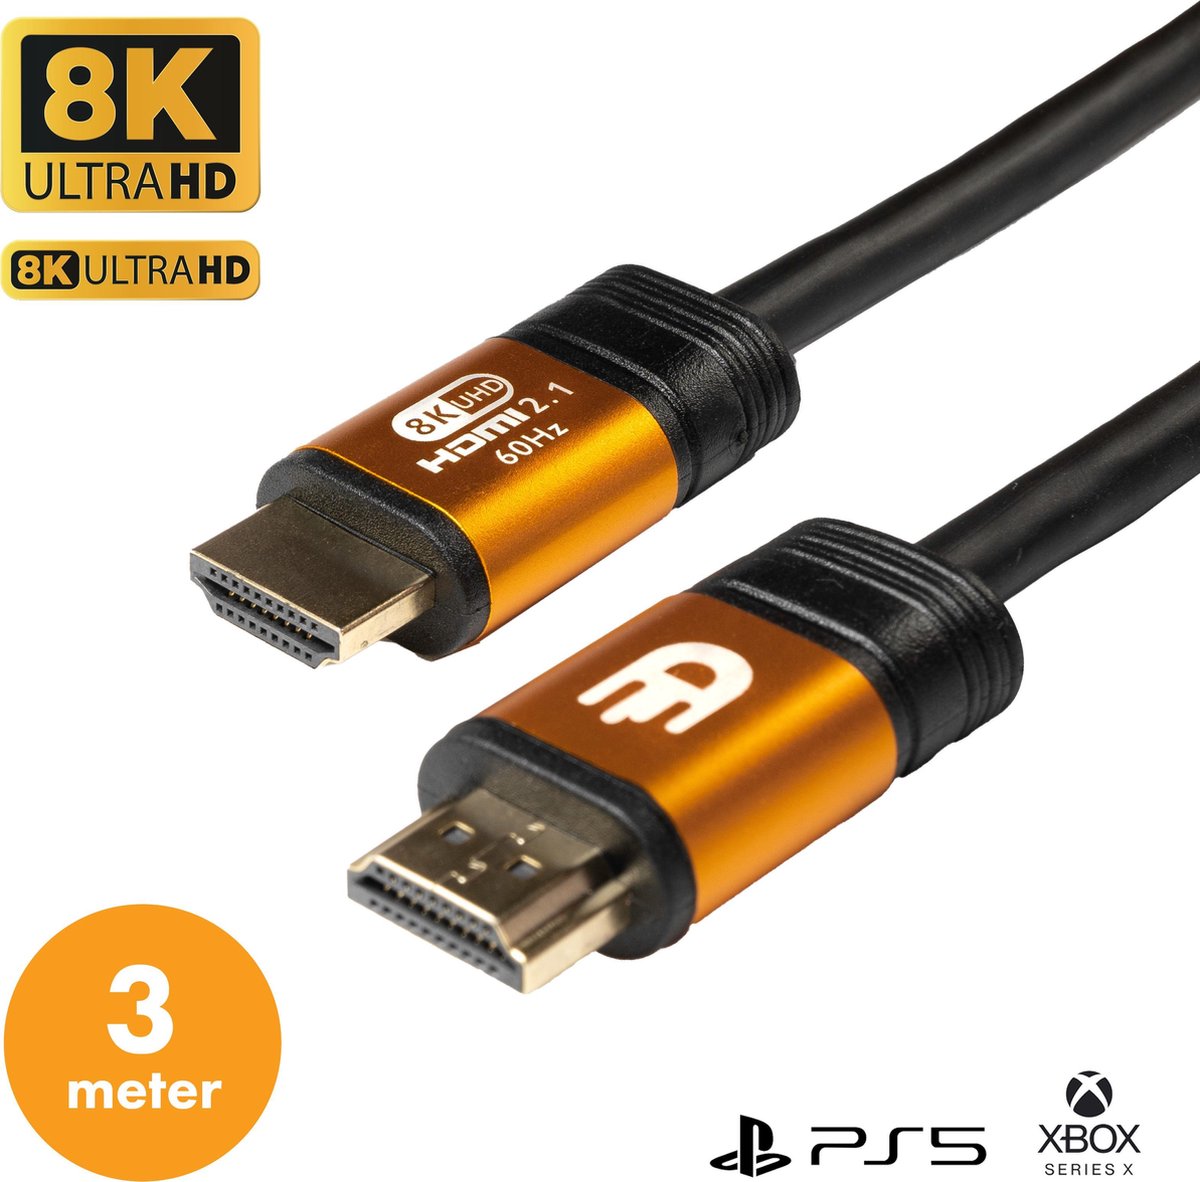 Drivv. Premium HDMI Kabel 2.1 - Ultra HD High Speed 8K - HDMI naar HDMI - Xbox Series X & PS5 - 3 meter - Oranje review